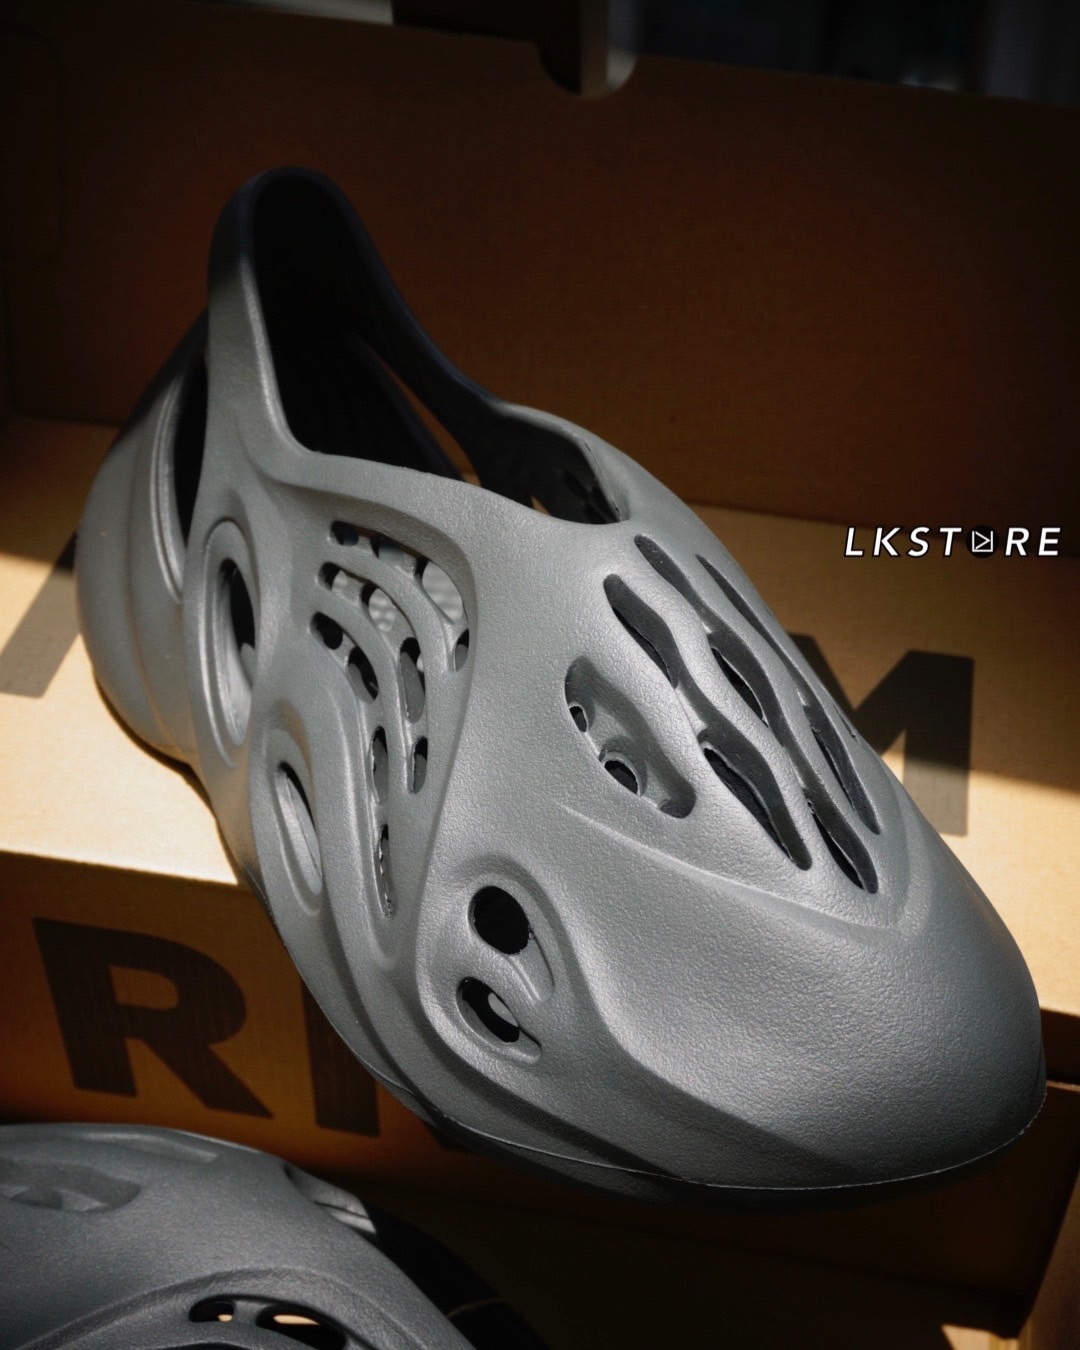 Adidas YEEZY FOAM RUNNER "Carbon" 深灰色IG 涼鞋懶人鞋愛迪達洞